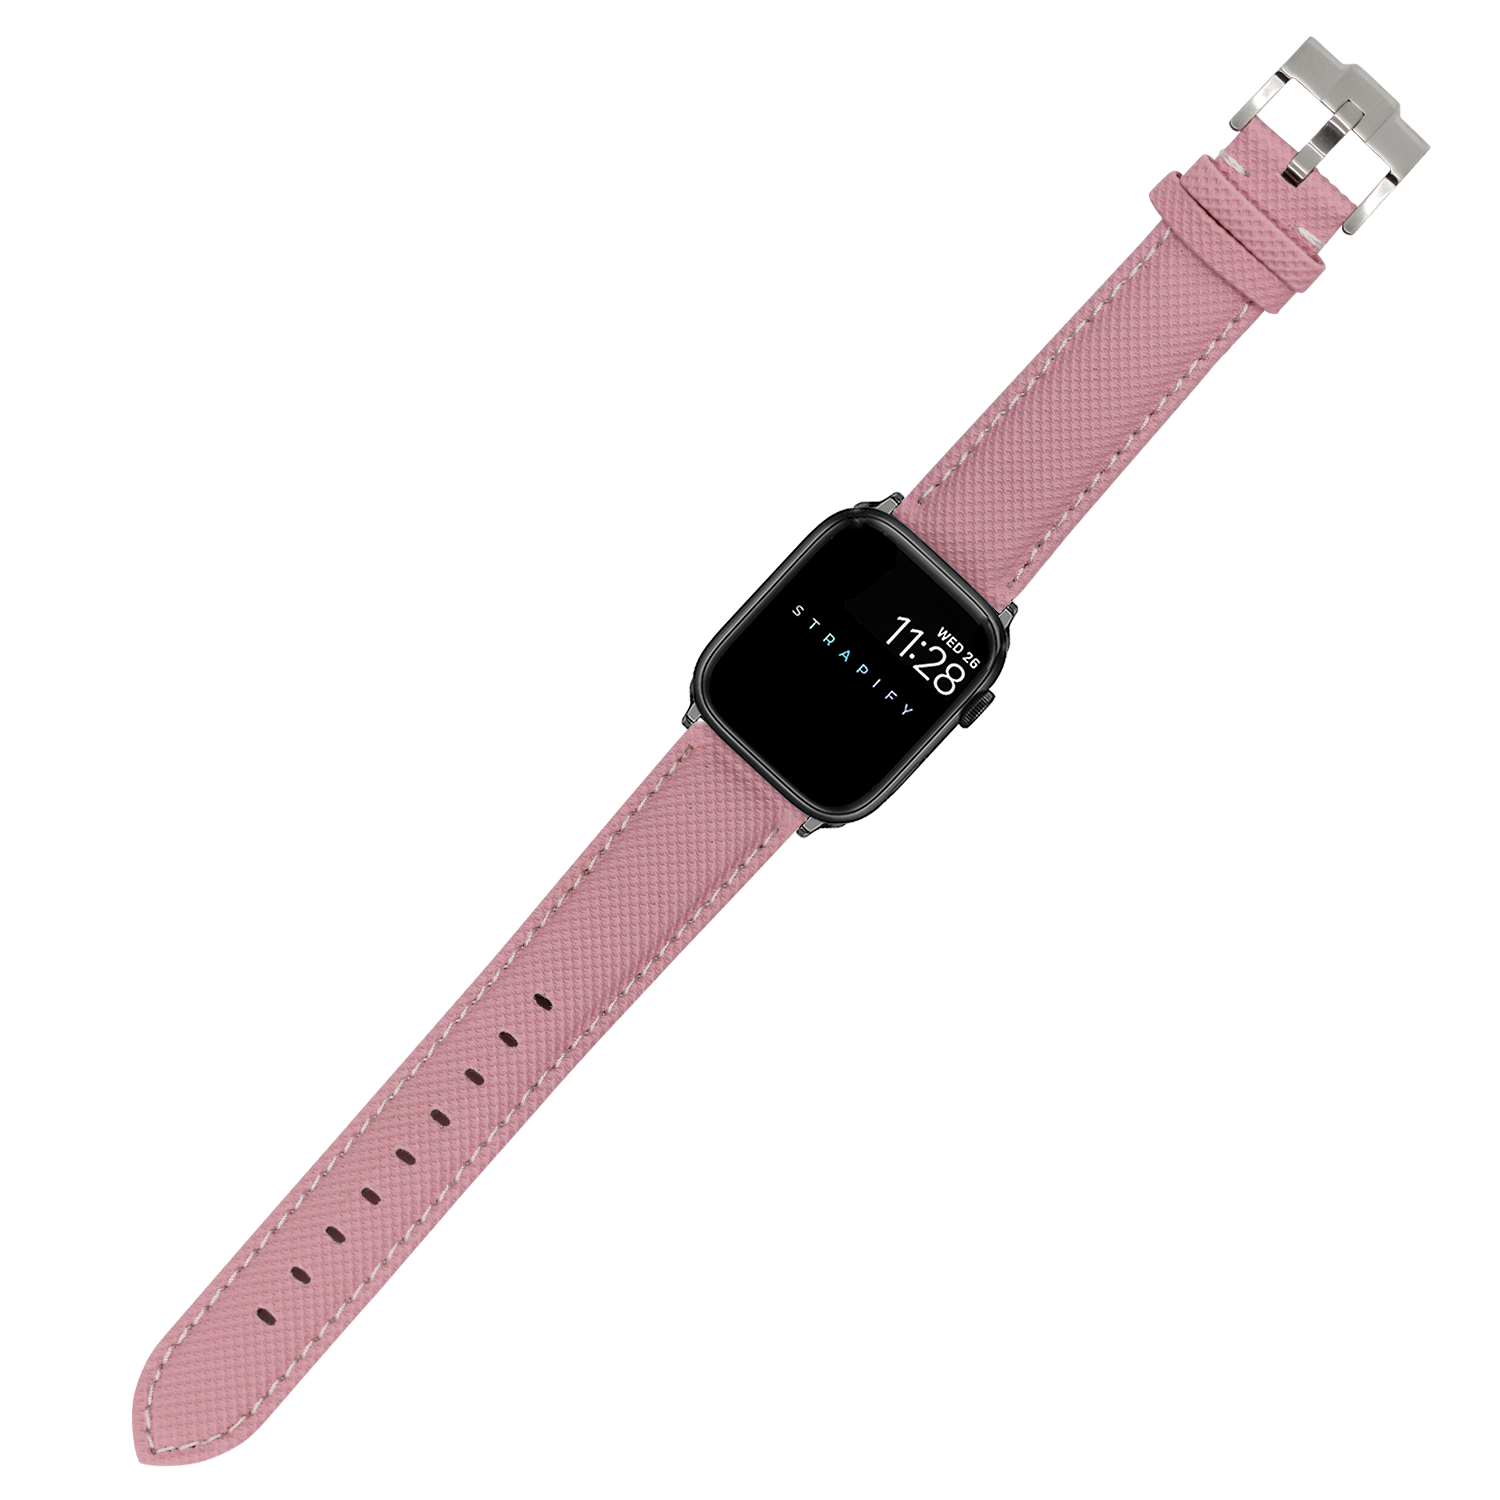 [Apple Watch] Sailcloth - Pink | White Stitching